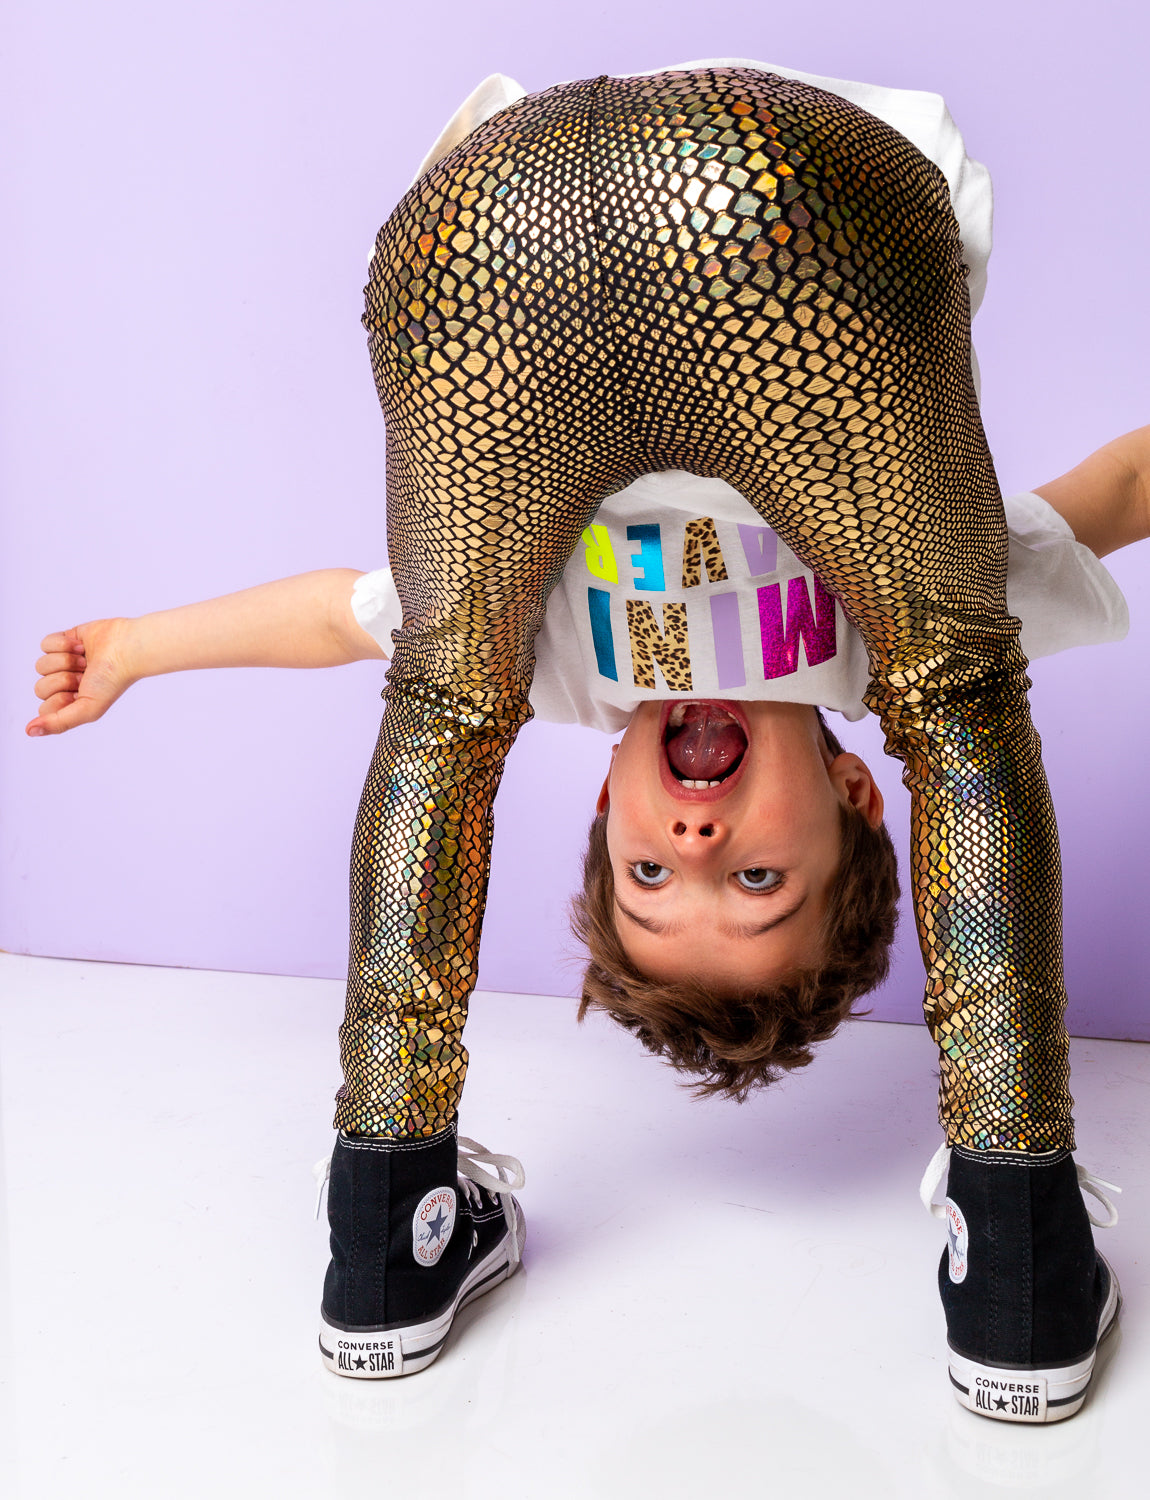 Boy upside down look through his legs wearing gold holographic snakeskin leggings.